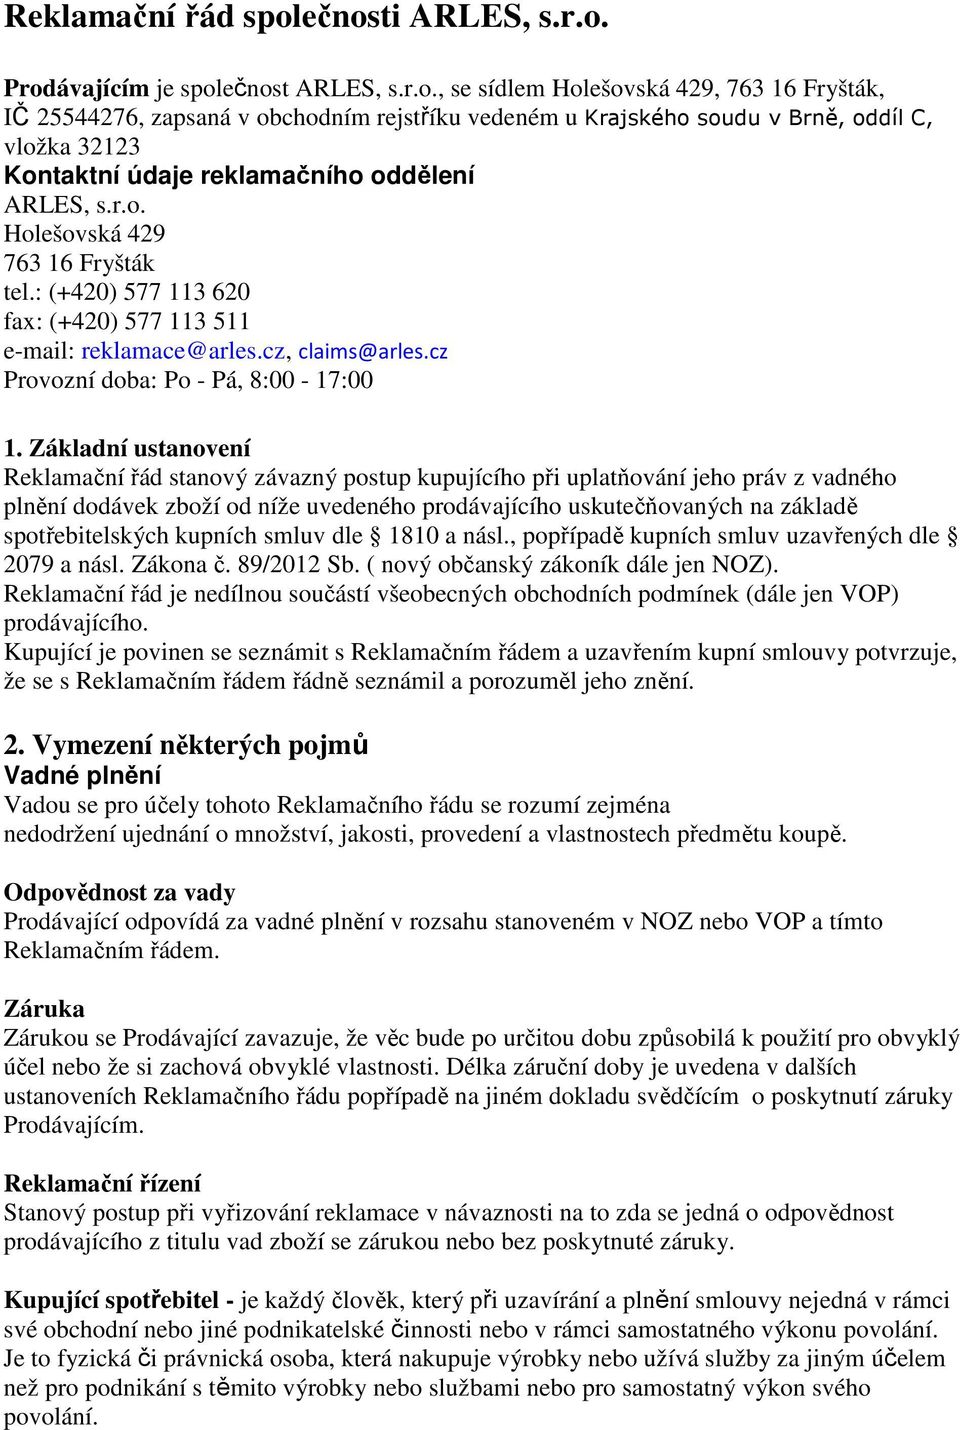 r.o. Holešovská 429 763 16 Fryšták tel.: (+420) 577 113 620 fax: (+420) 577 113 511 e-mail: reklamace@arles.cz, claims@arles.cz Provozní doba: Po - Pá, 8:00-17:00 1.